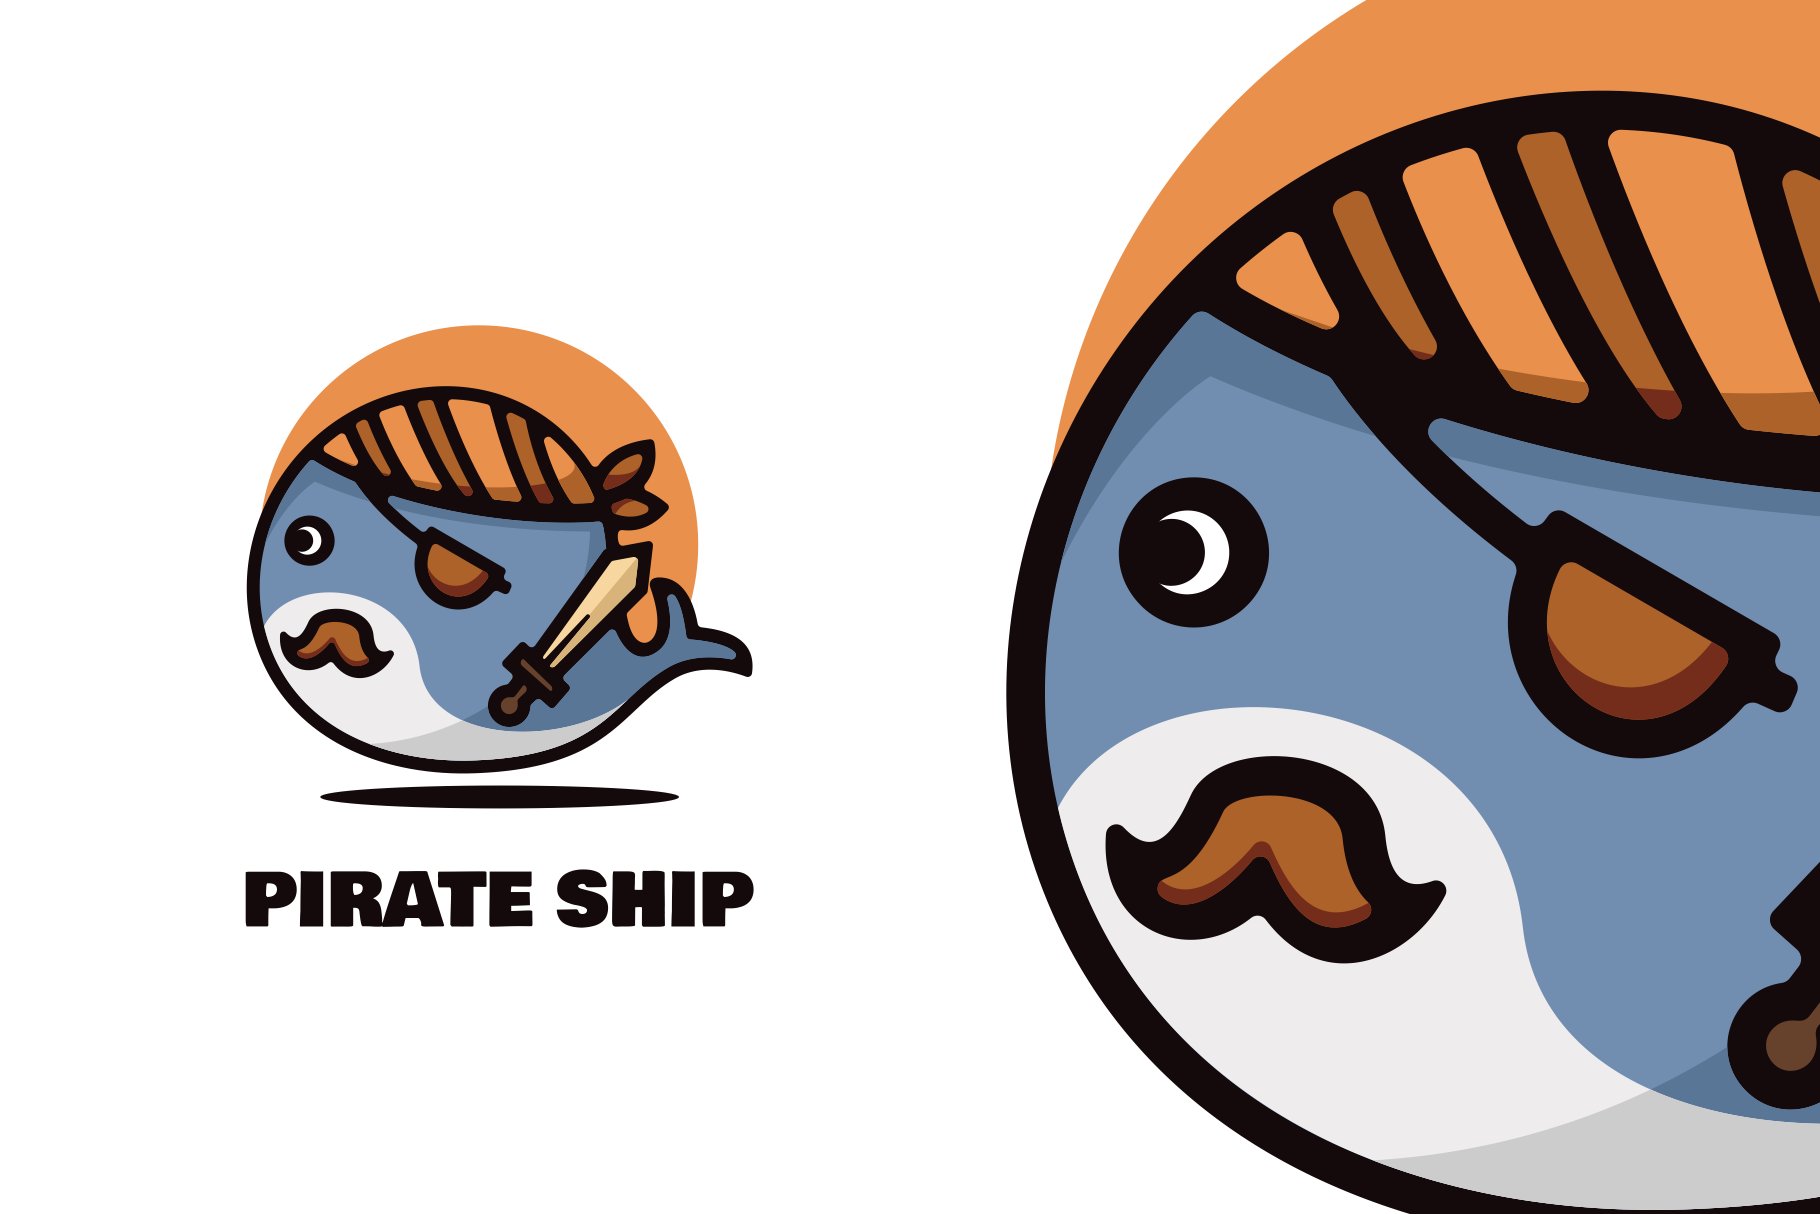 Whale Cartoon Logo cover image.